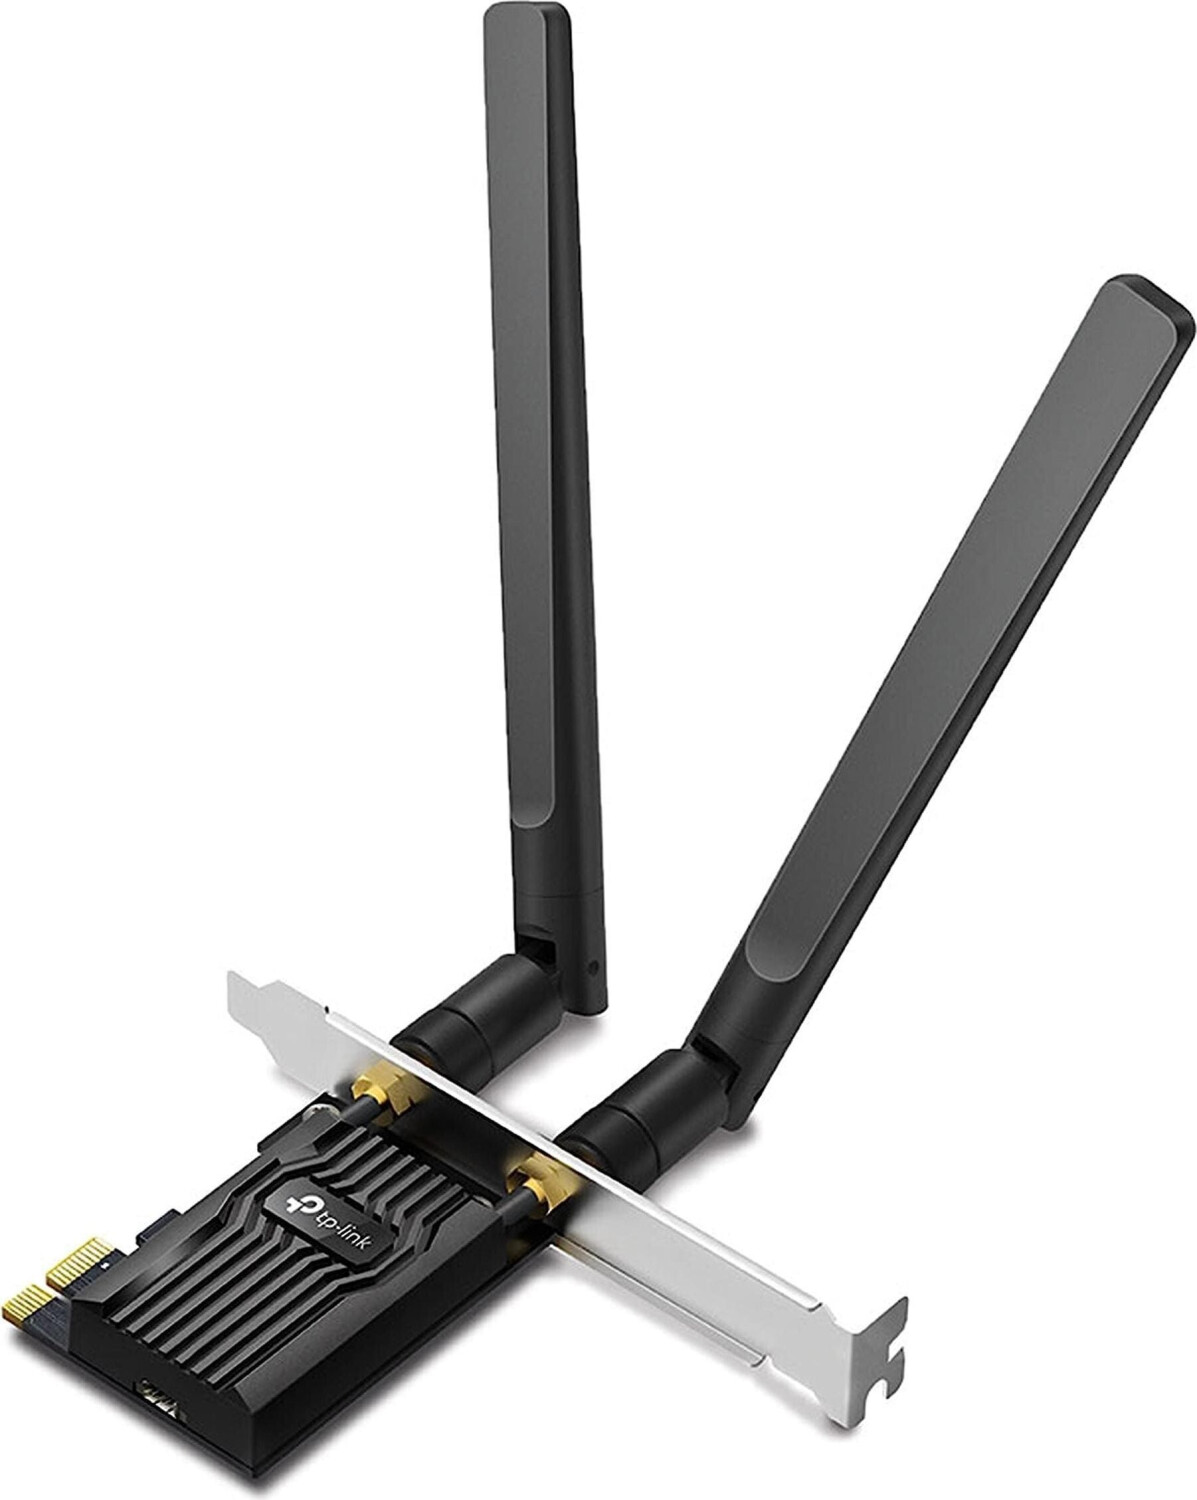 Carte Réseau PCIe WiFi/Bluetooth TP-Link Archer TX55E (AX3000